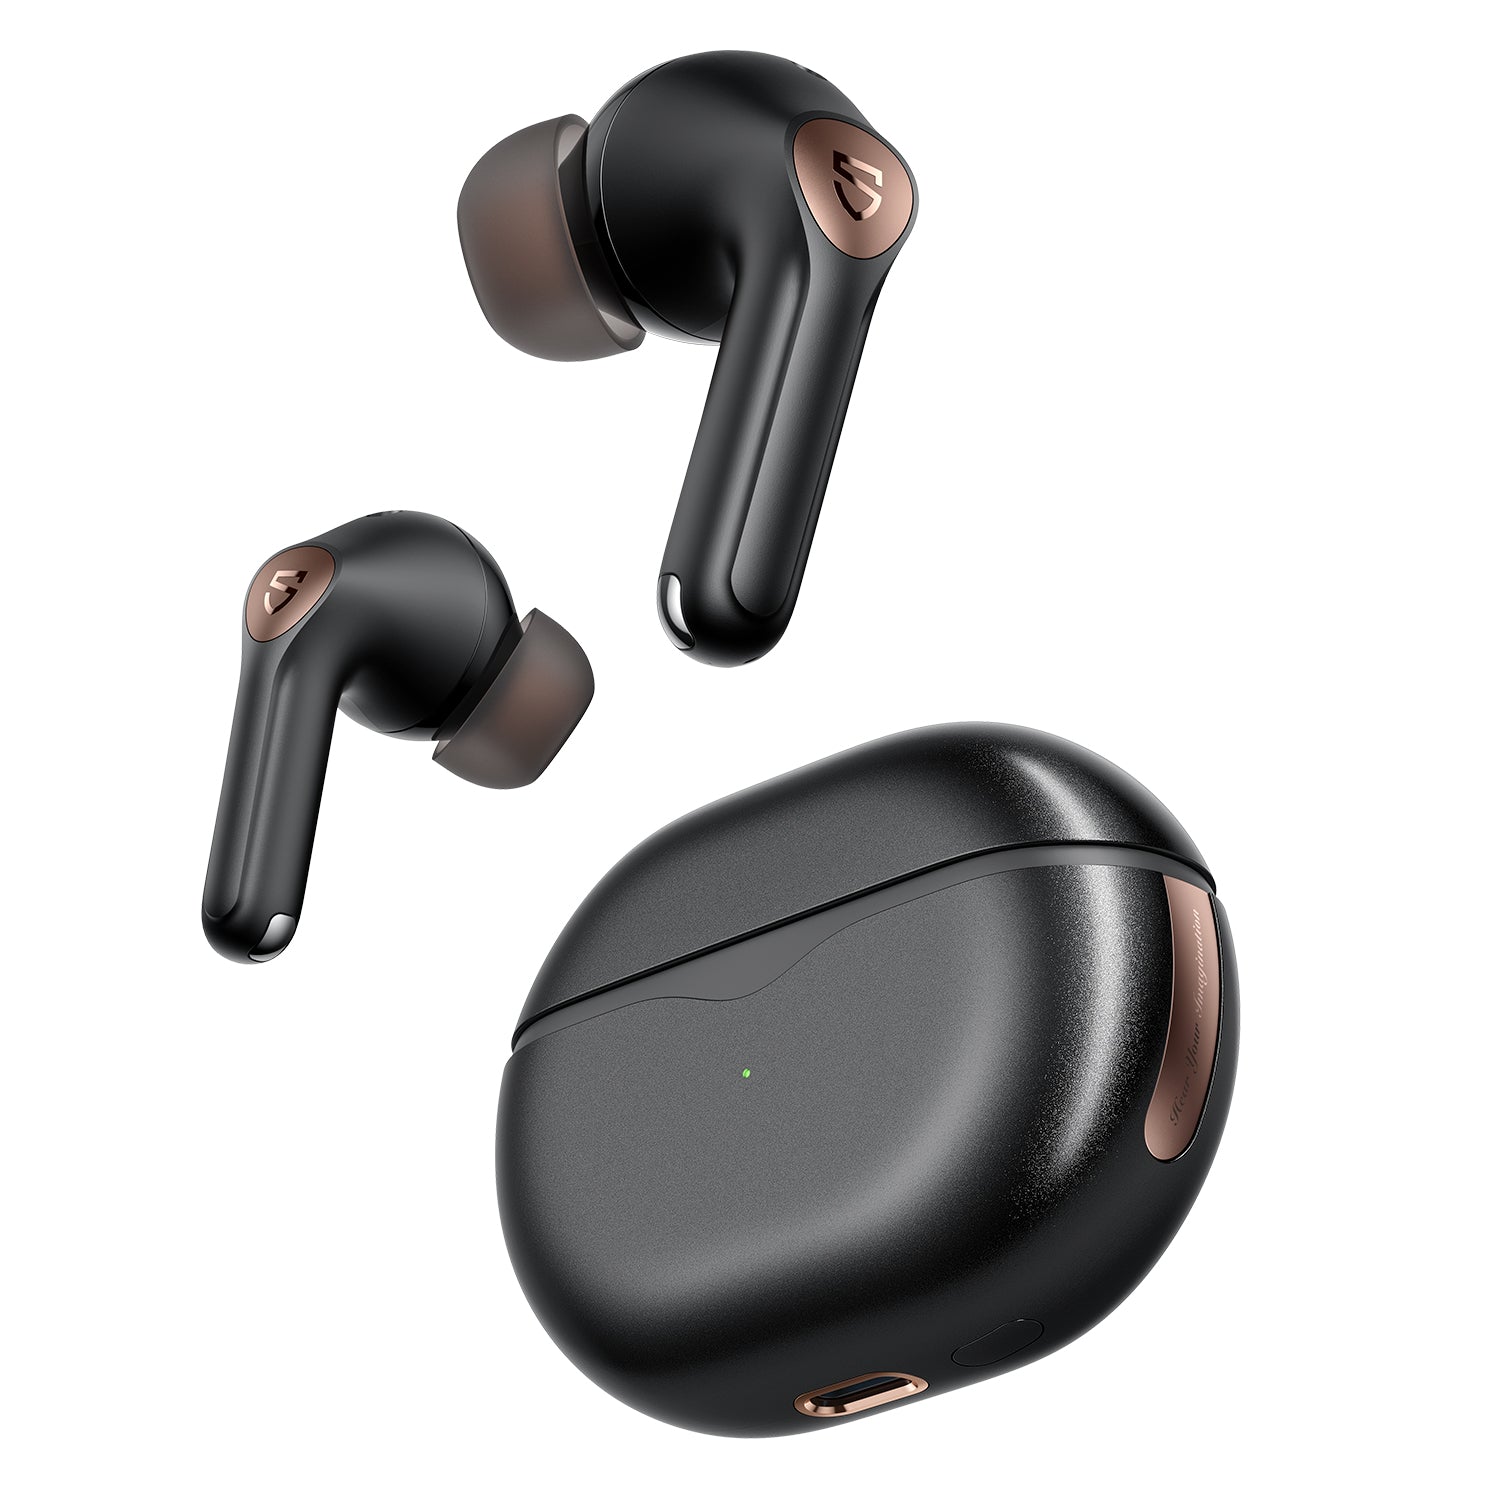 Soundpeats Air 4 Pro Audífonos Bluetooth Snapdragon Sound